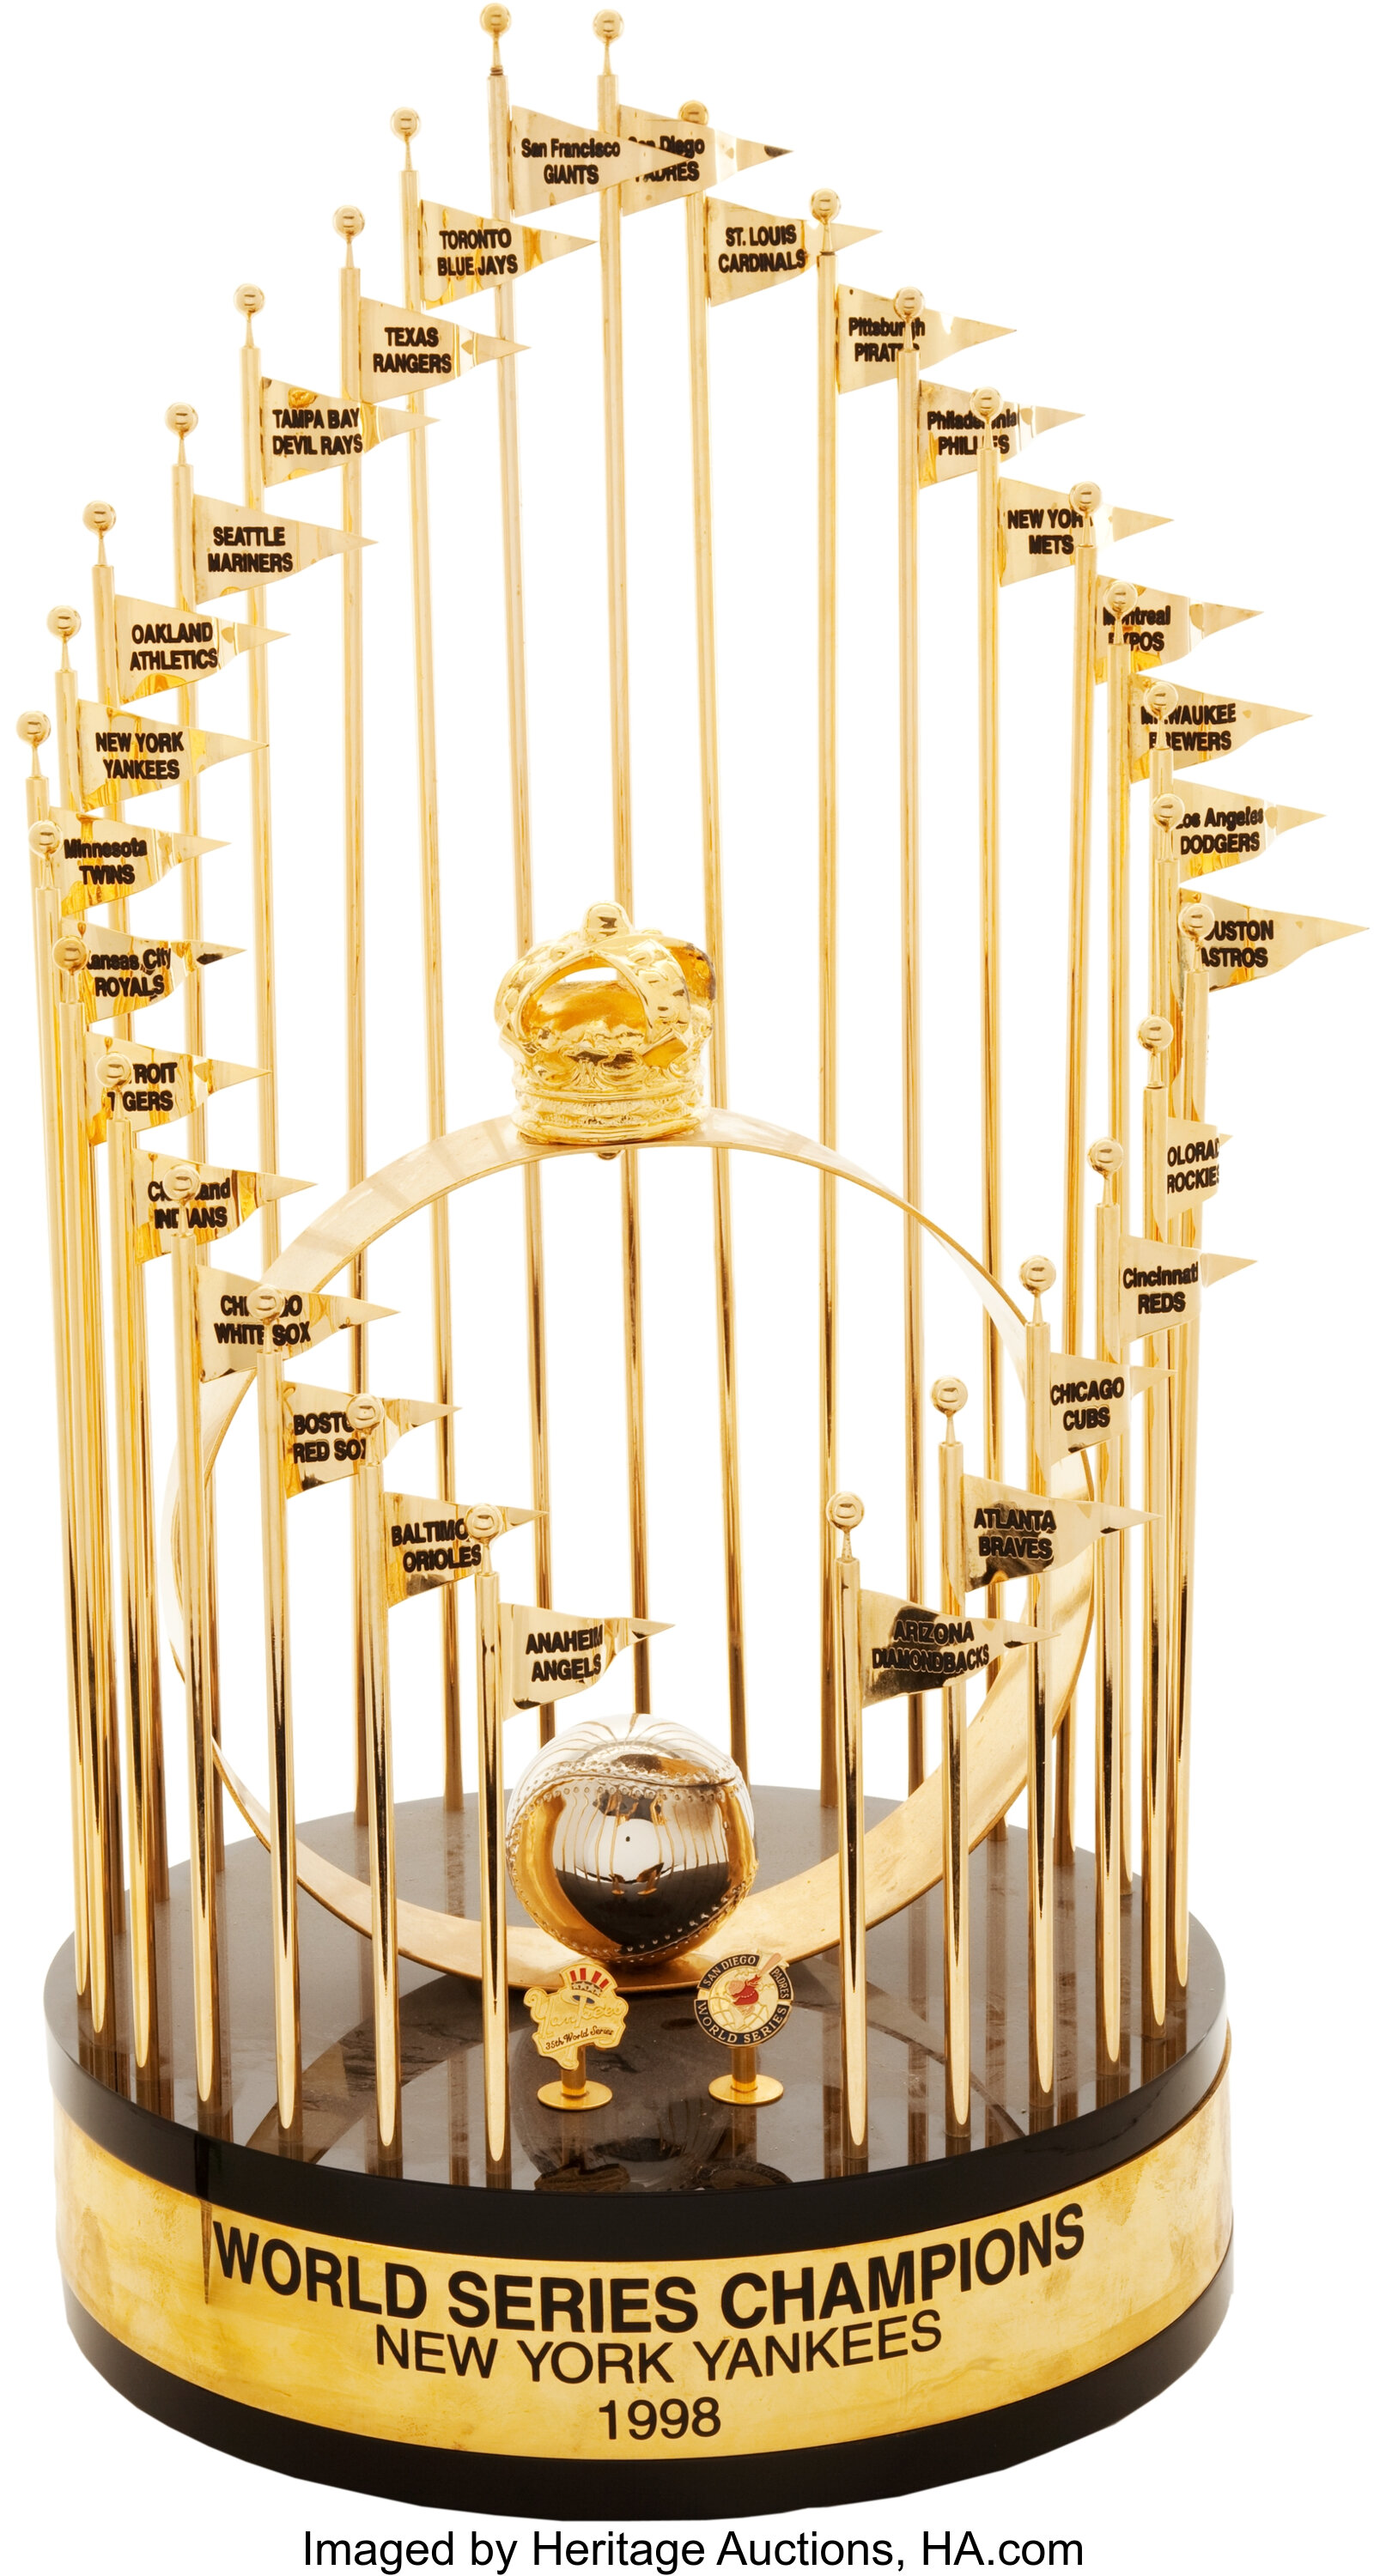 New York Yankee World Championship Trophies